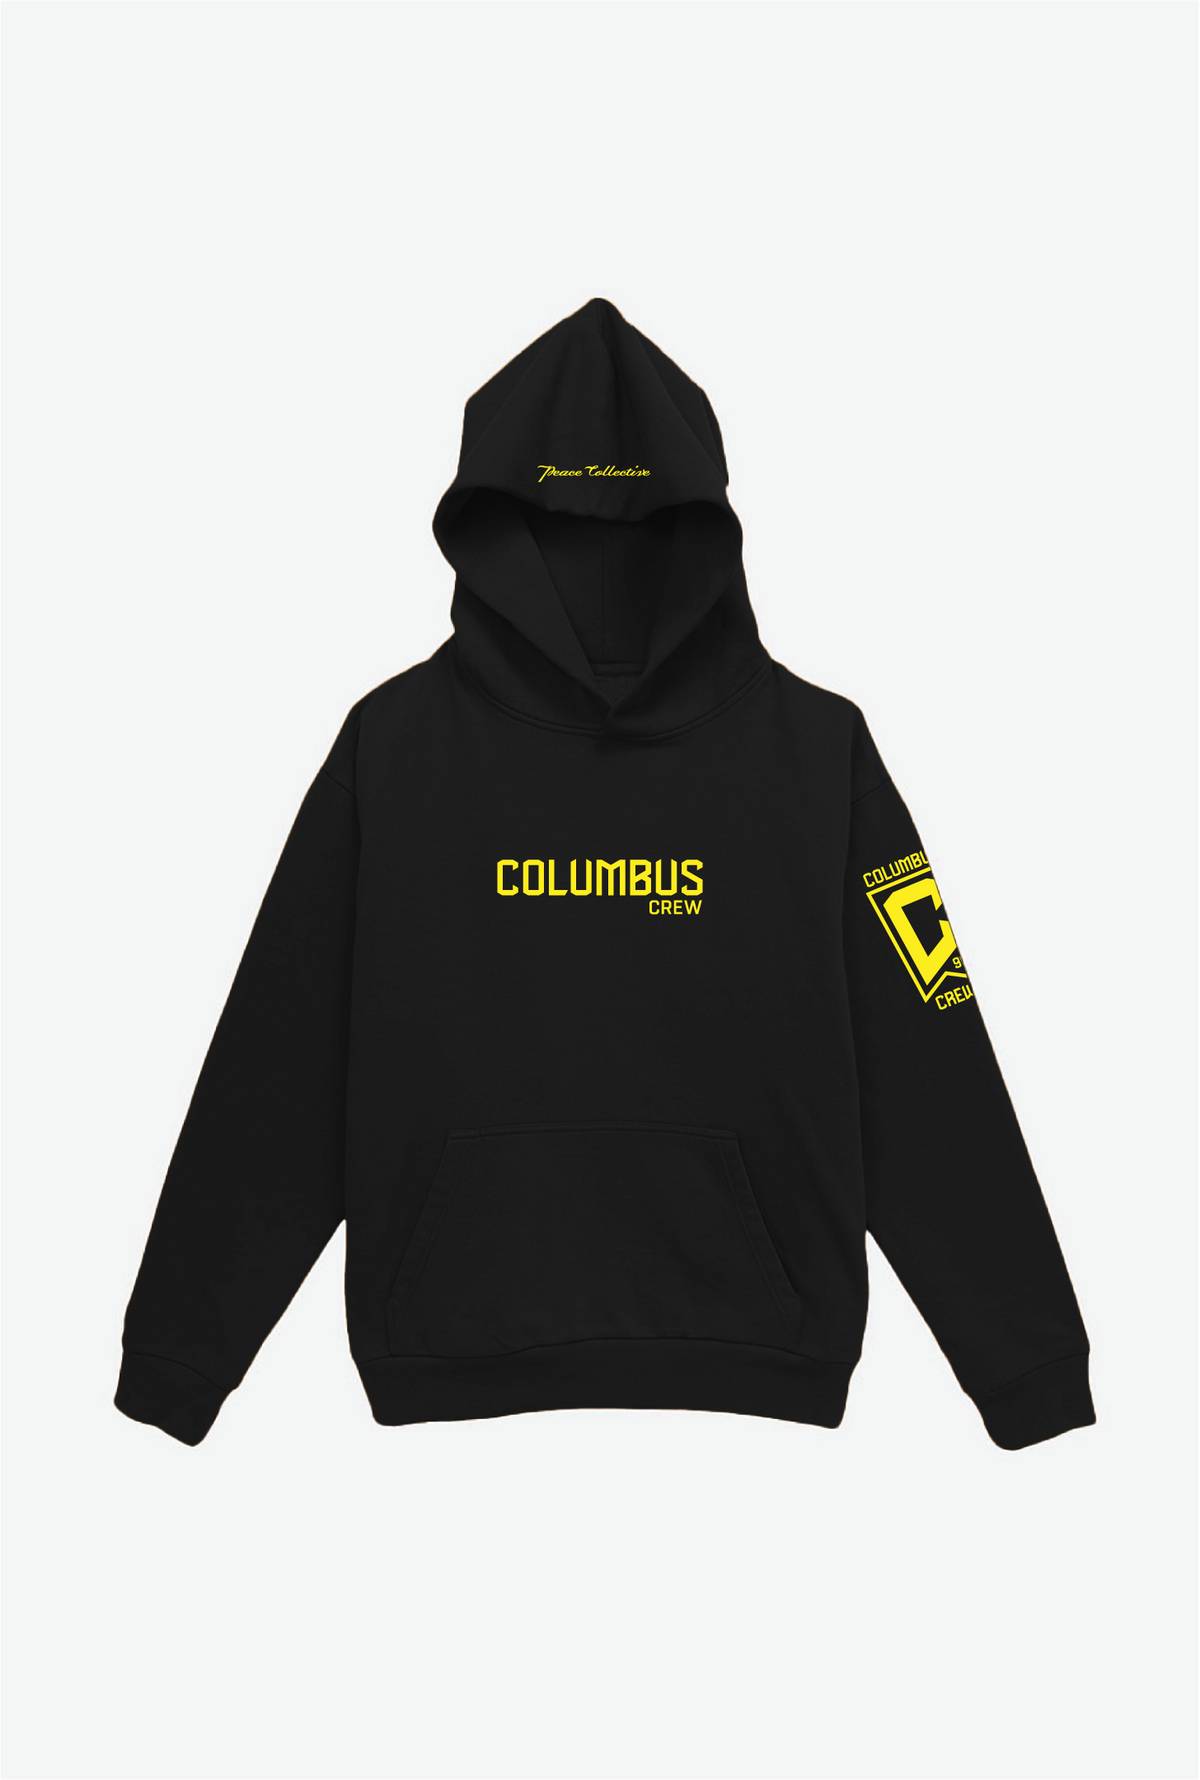 Columbus Crew Heavyweight Hoodie - Black